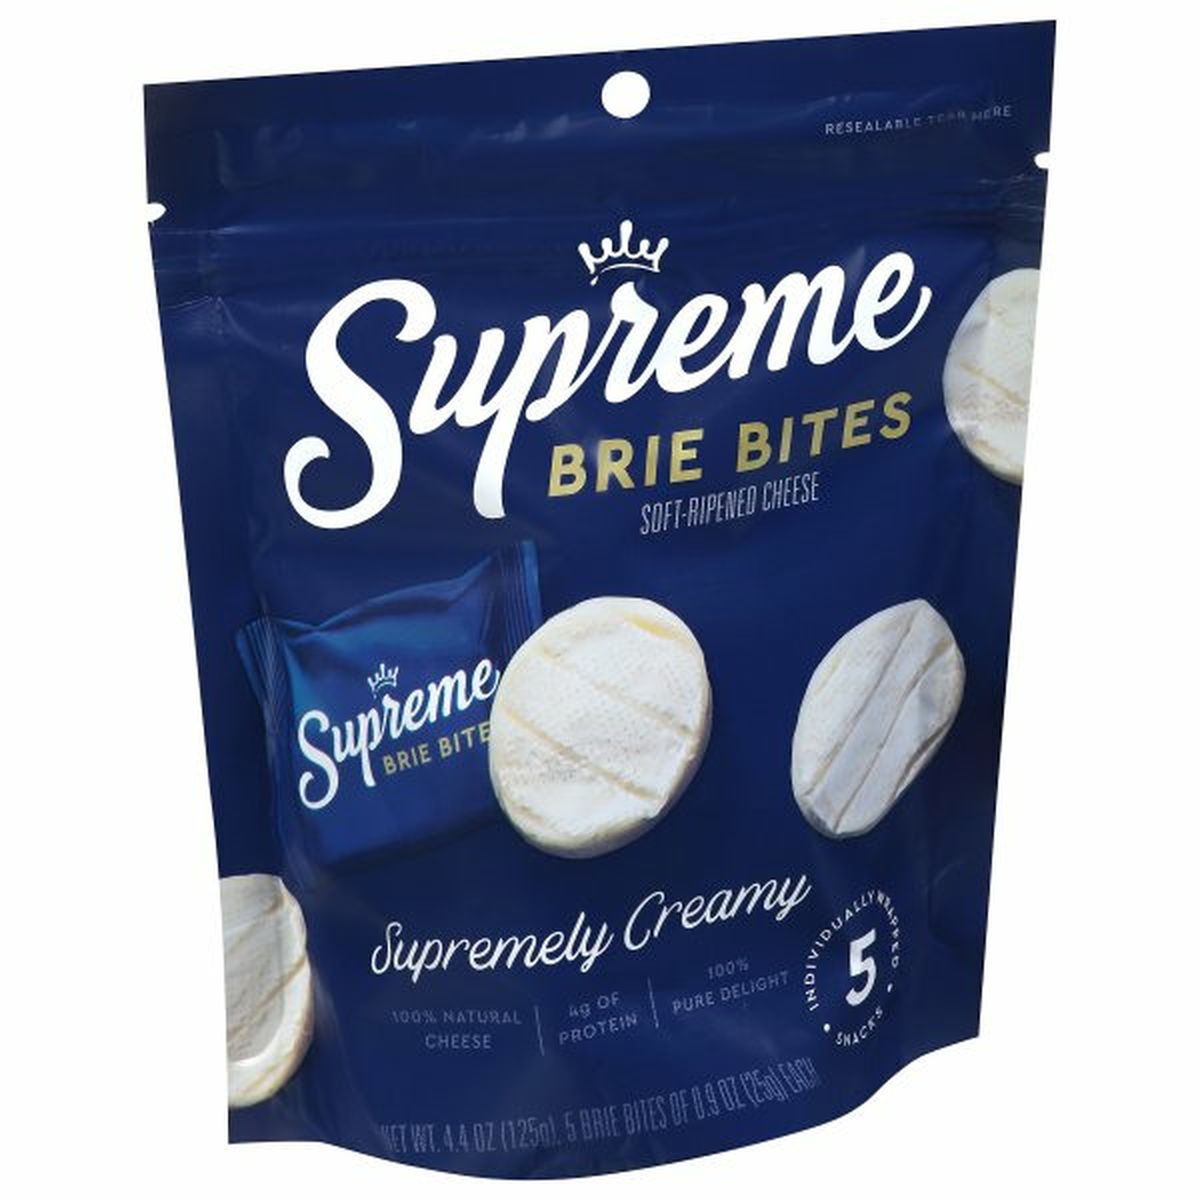 Calories in Supreme Star Brie Bites, Supremely Creamy